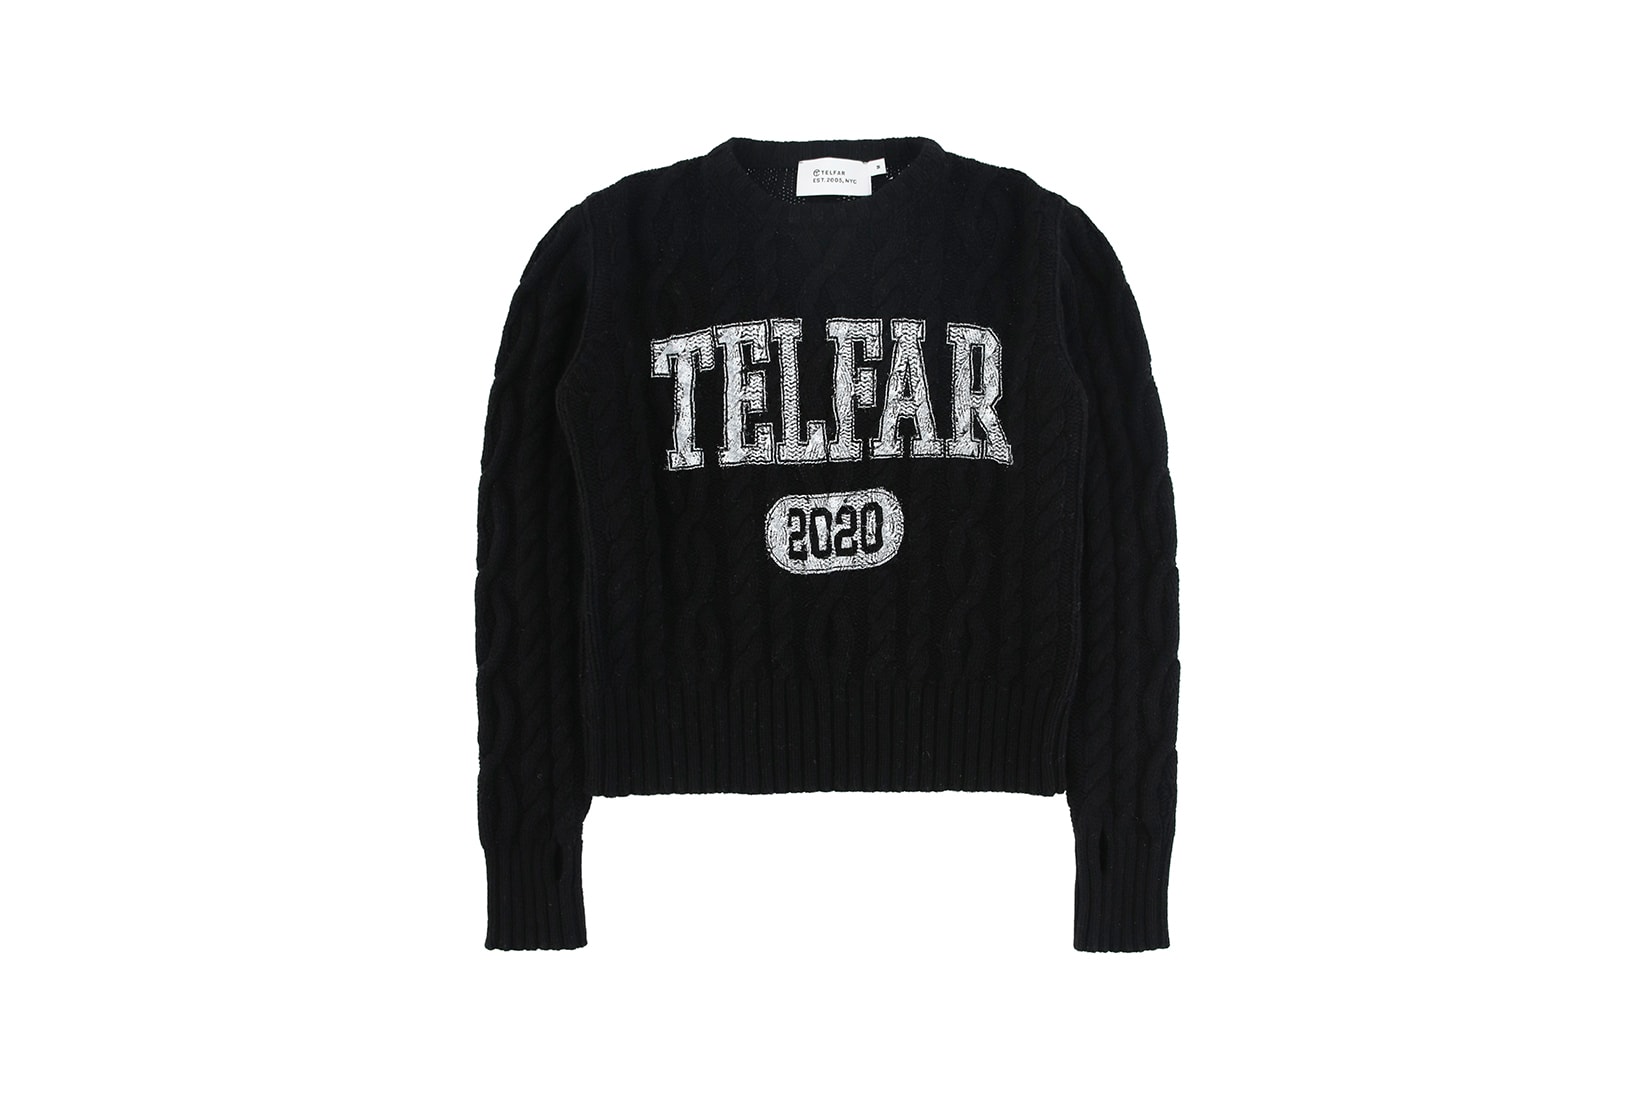 telfar cable knit knitwear thumbhole sweater winter apparel black white